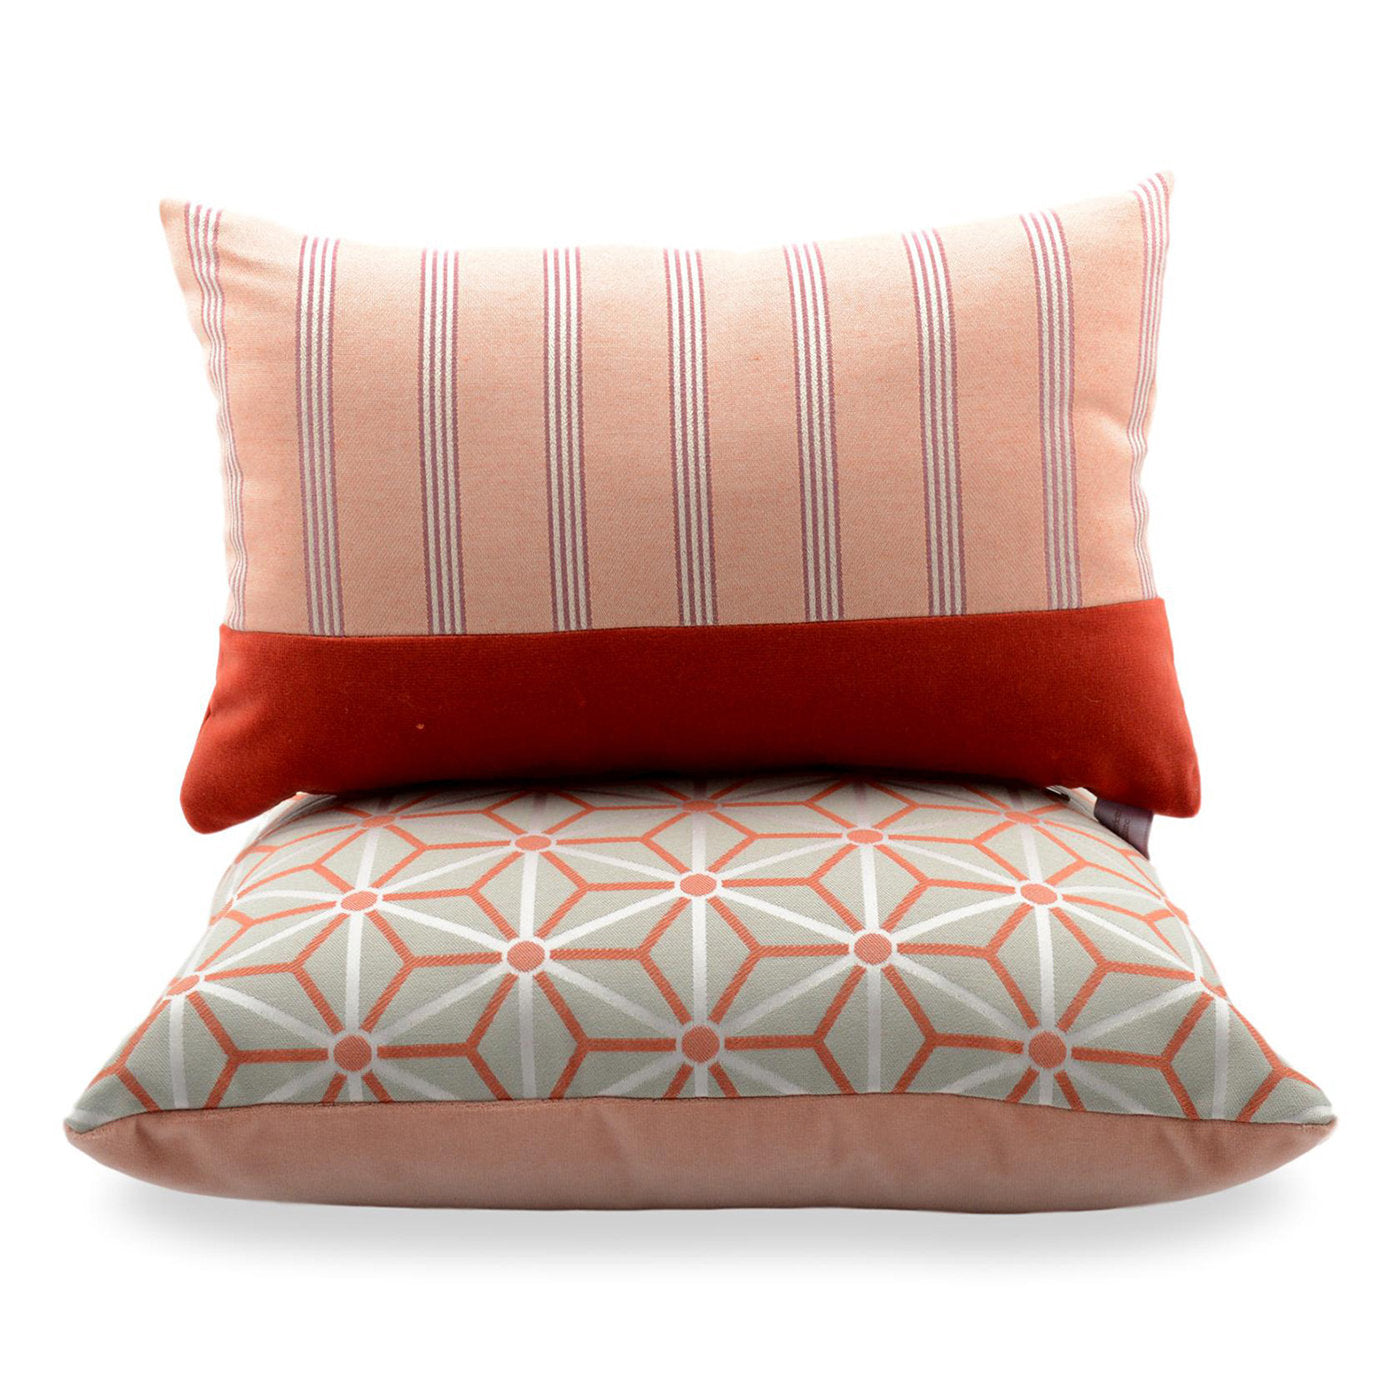 Peach Carrè Cushion in Steila jacquard fabric - Alternative view 3